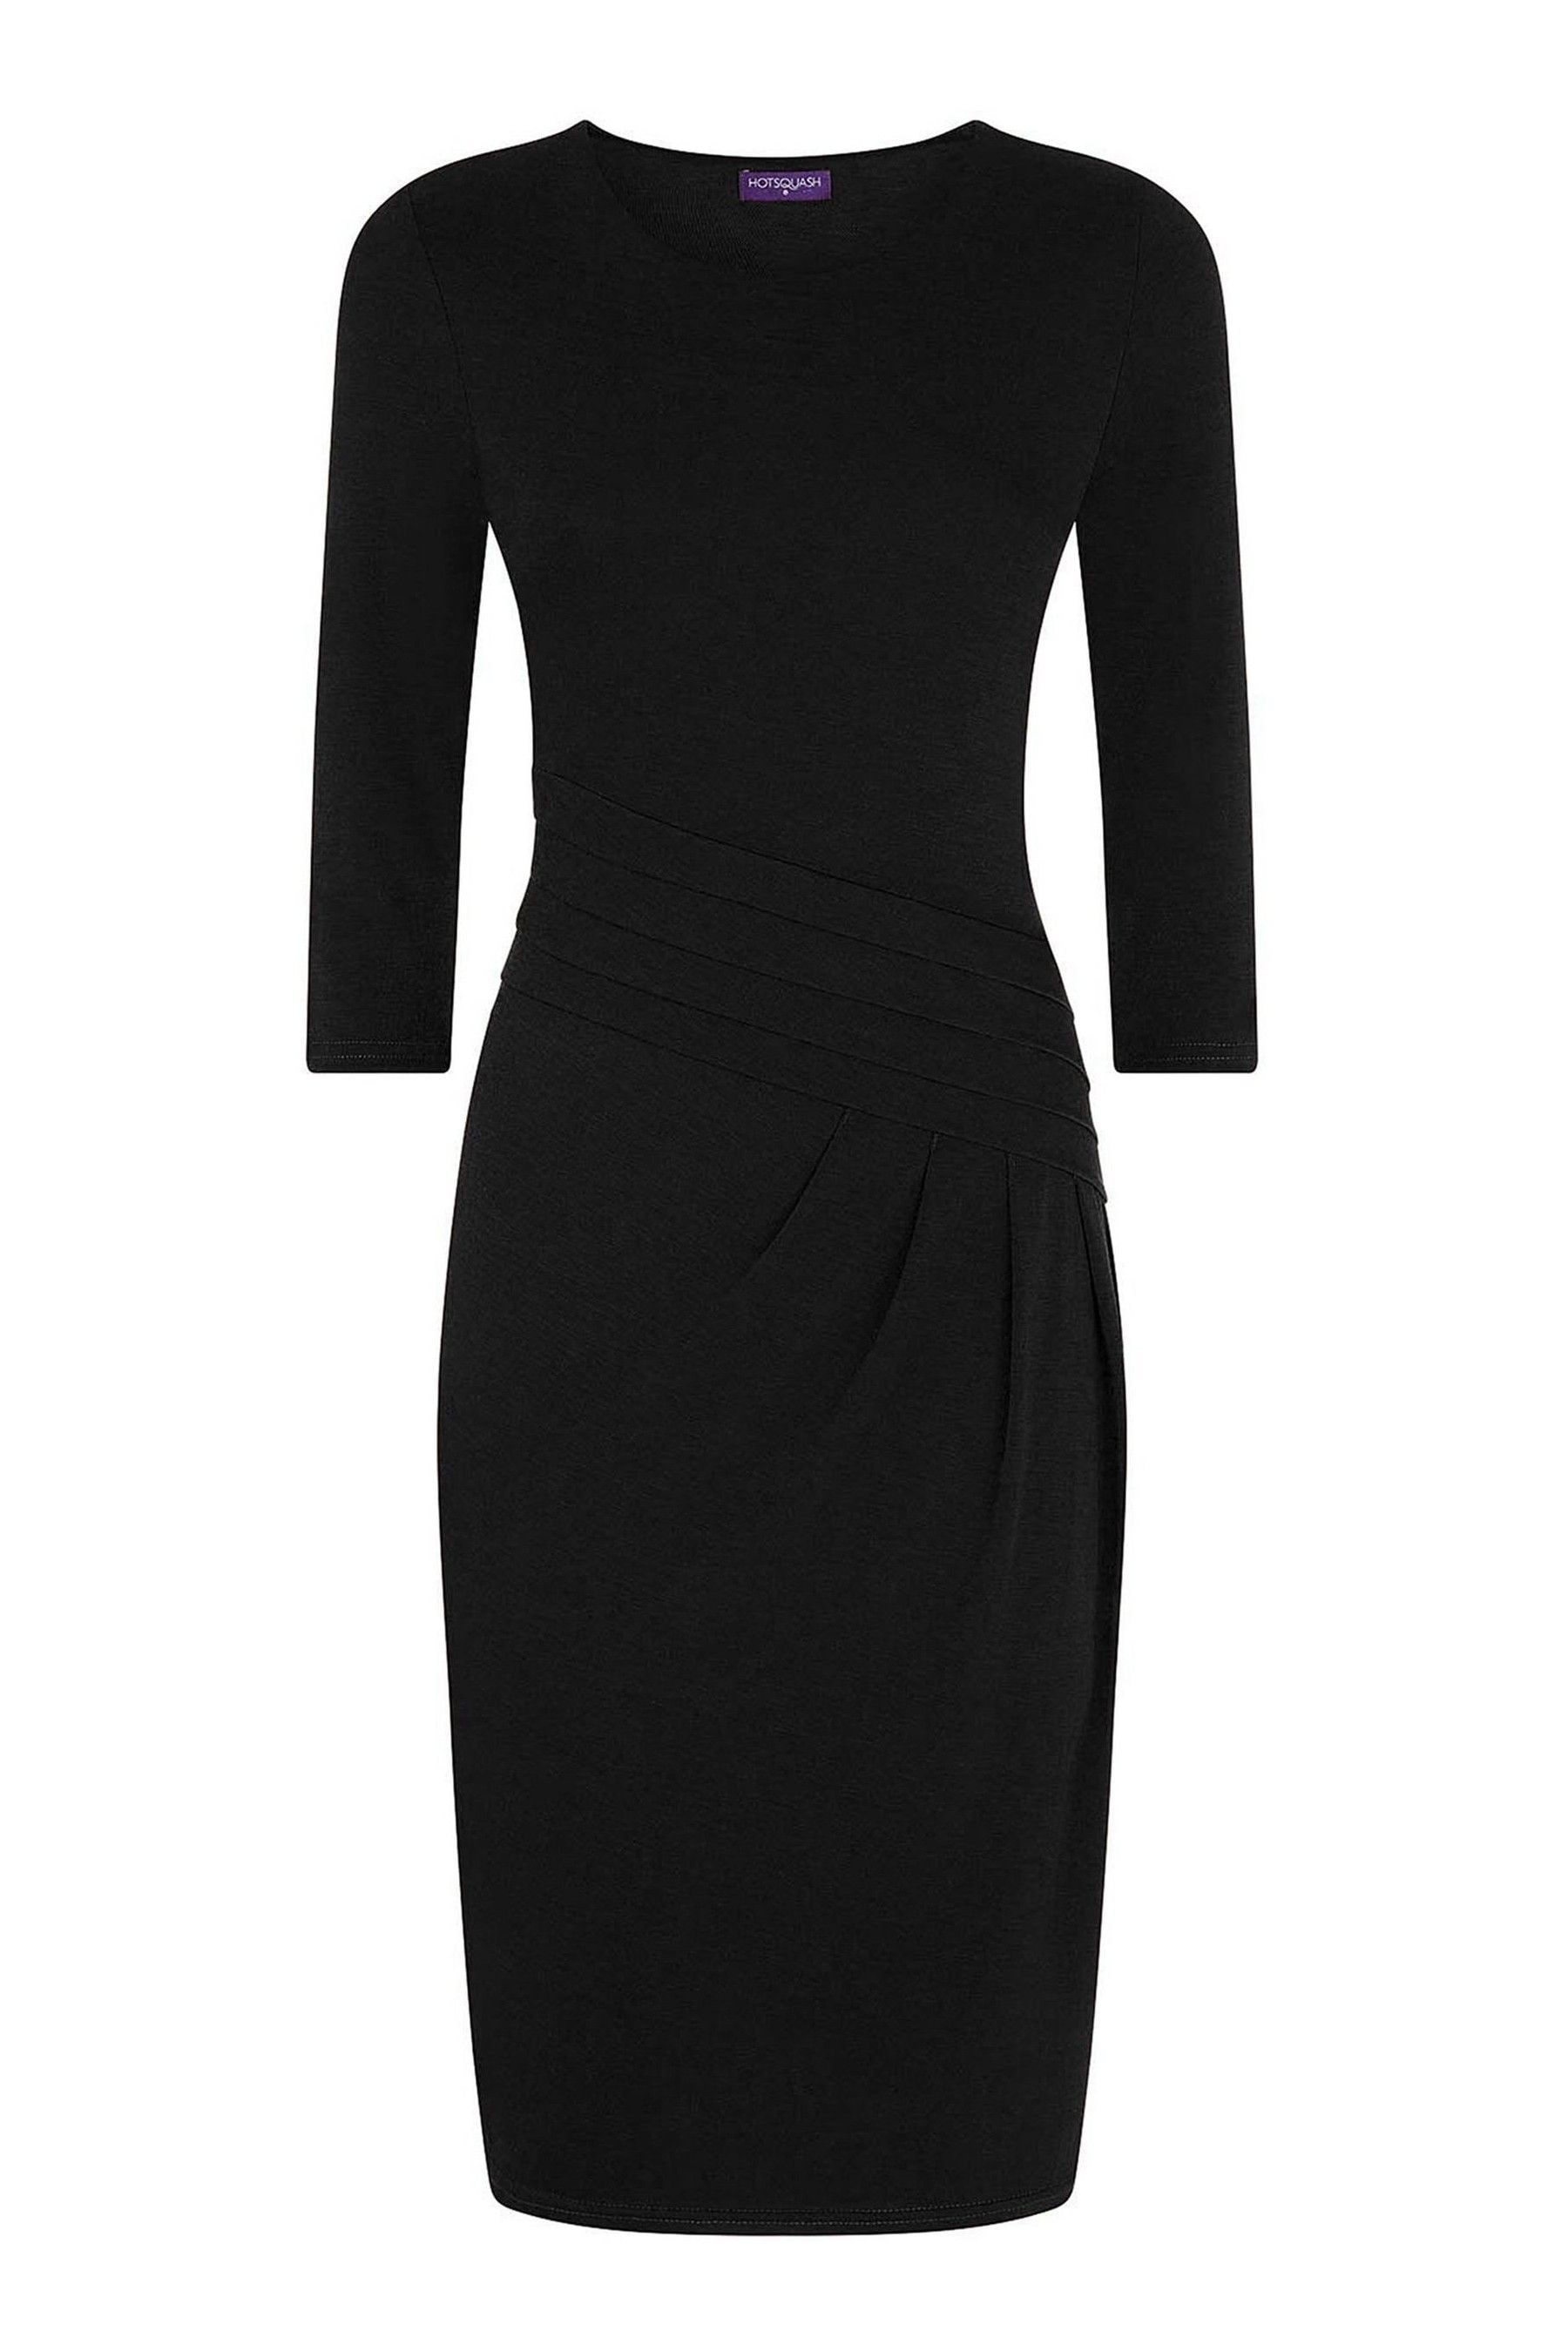 Buy HotSquash Black Pleat Waist Dress from the Next UK online shop